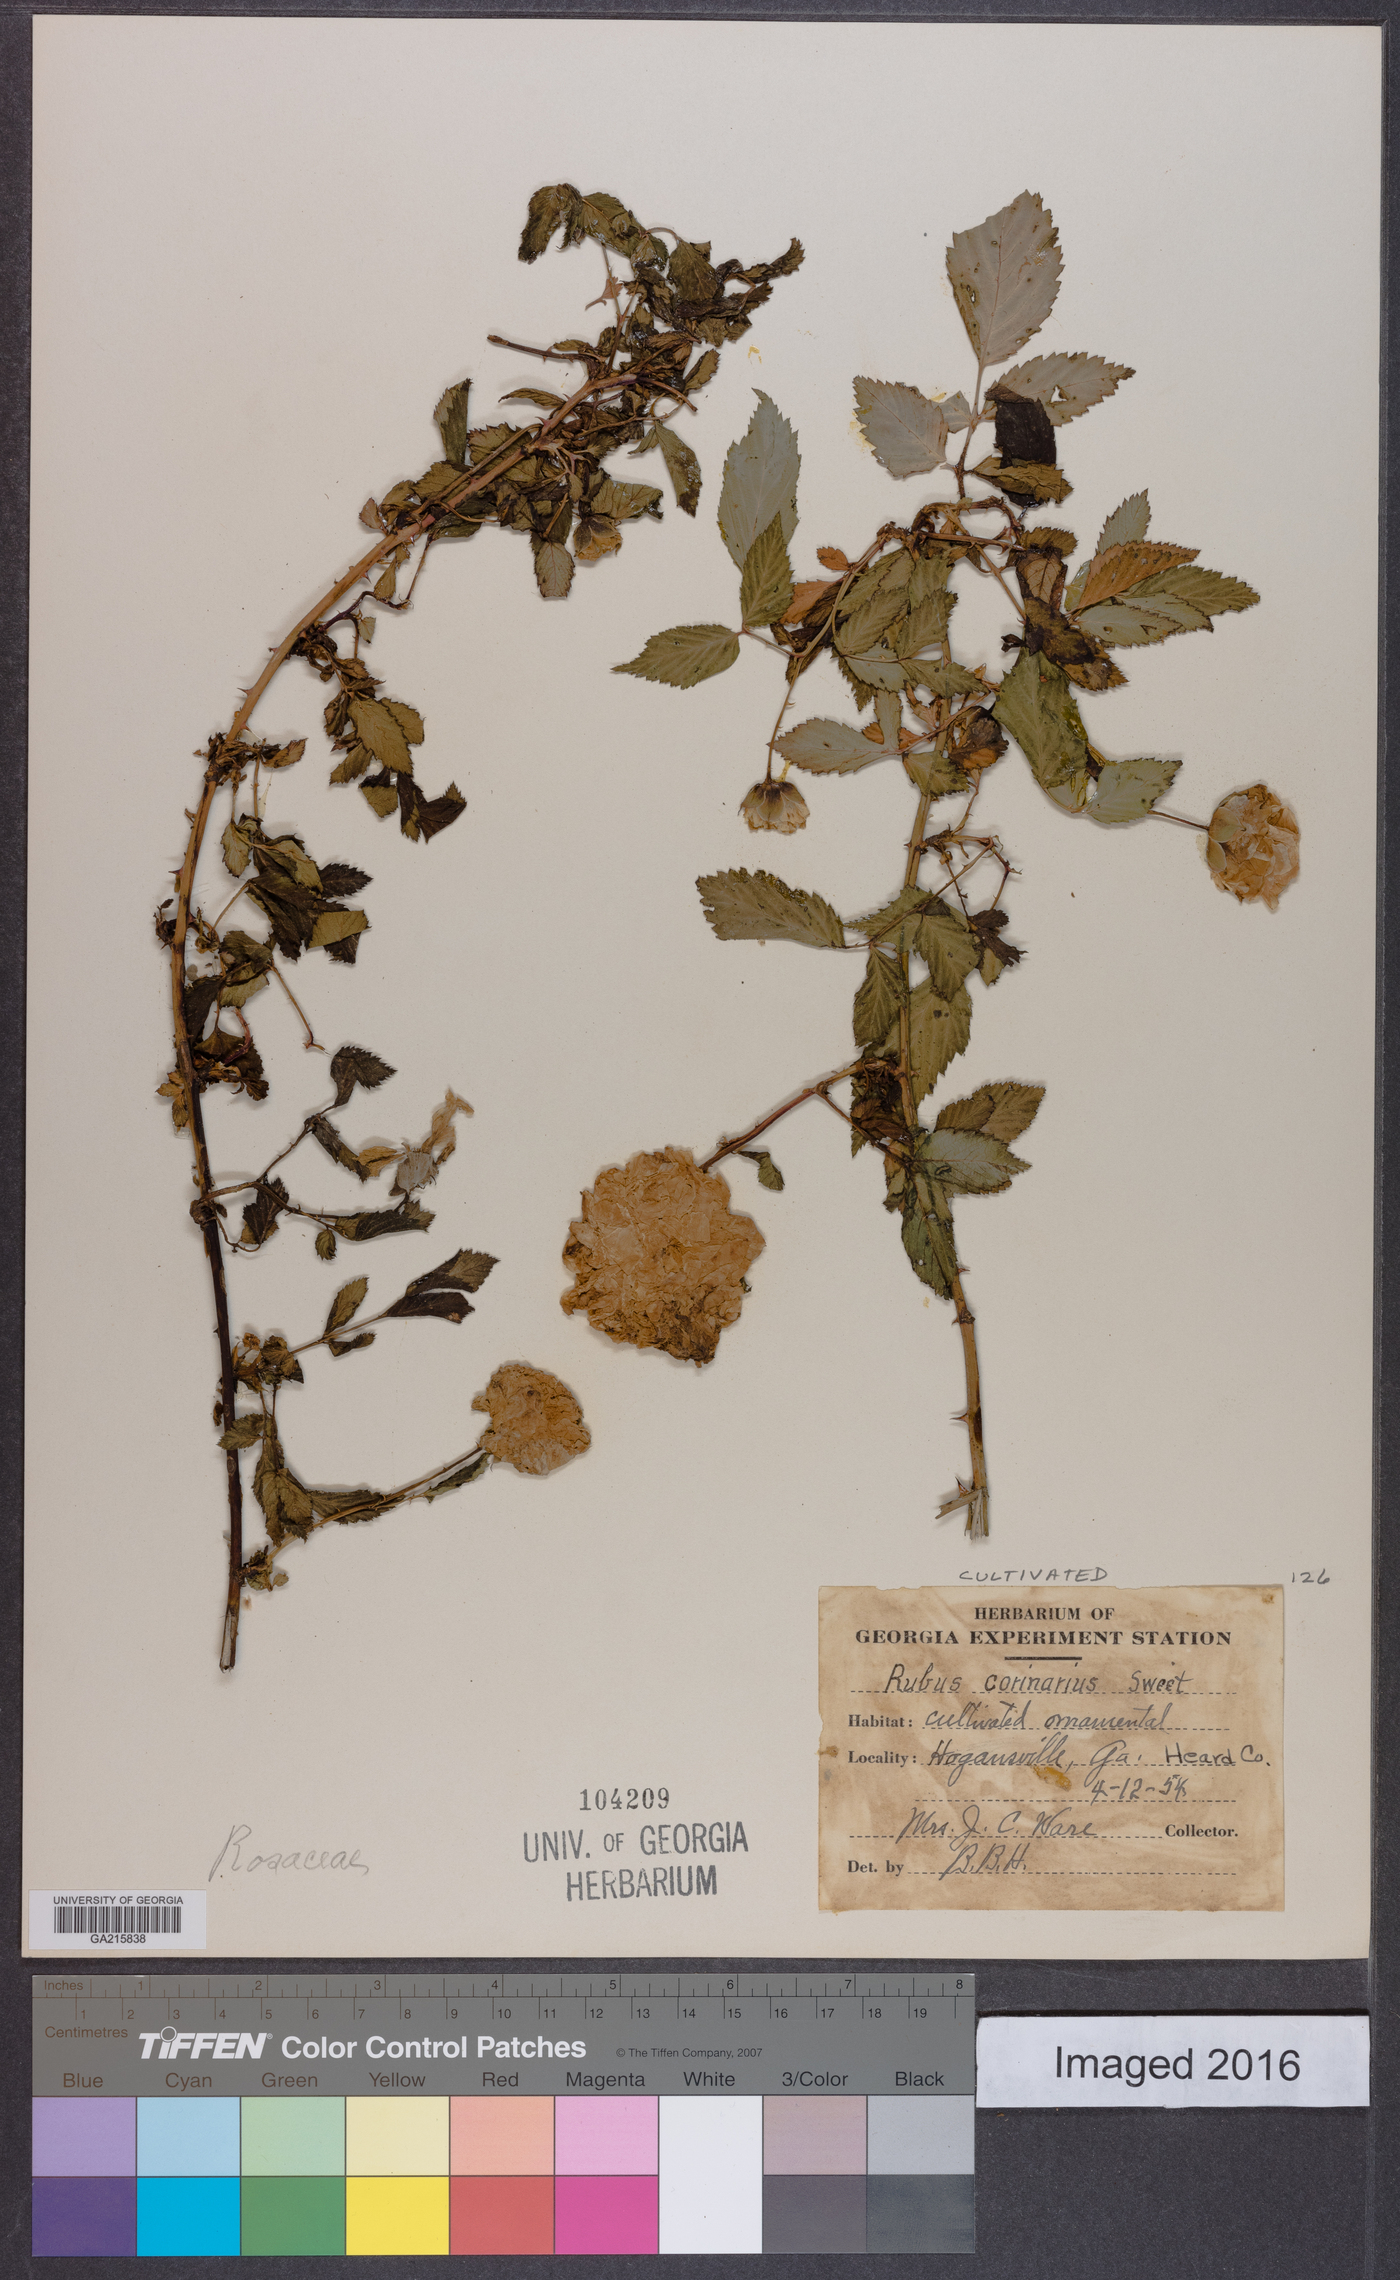 Rubus coronarius image